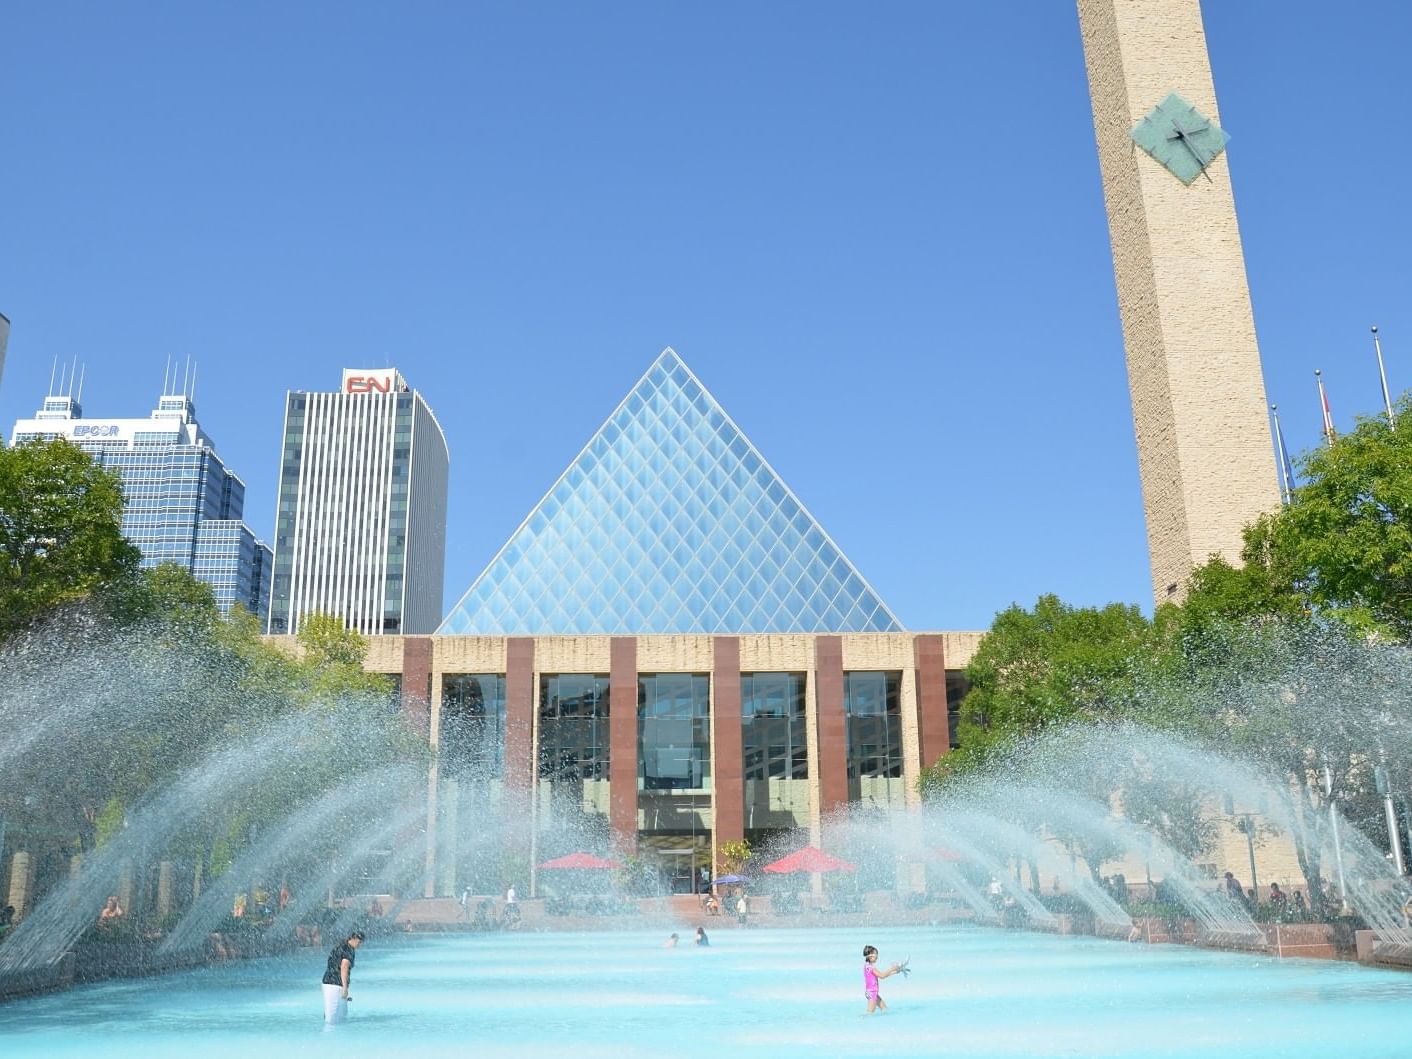 Distant view of Edmonton City Hall near the Matrix Hotel